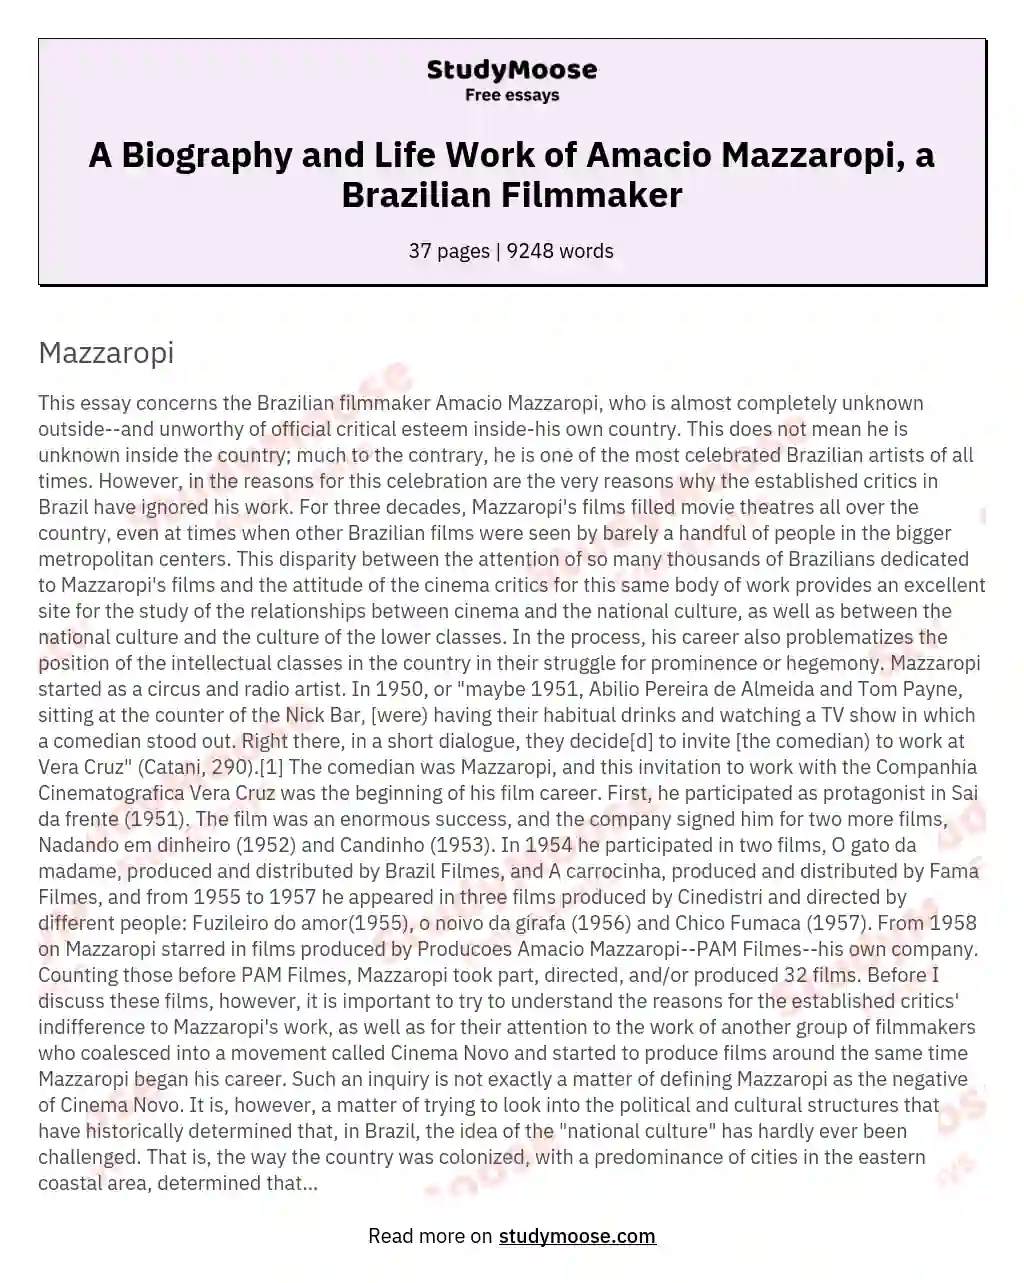 A Biography and Life Work of Amacio Mazzaropi, a Brazilian Filmmaker essay